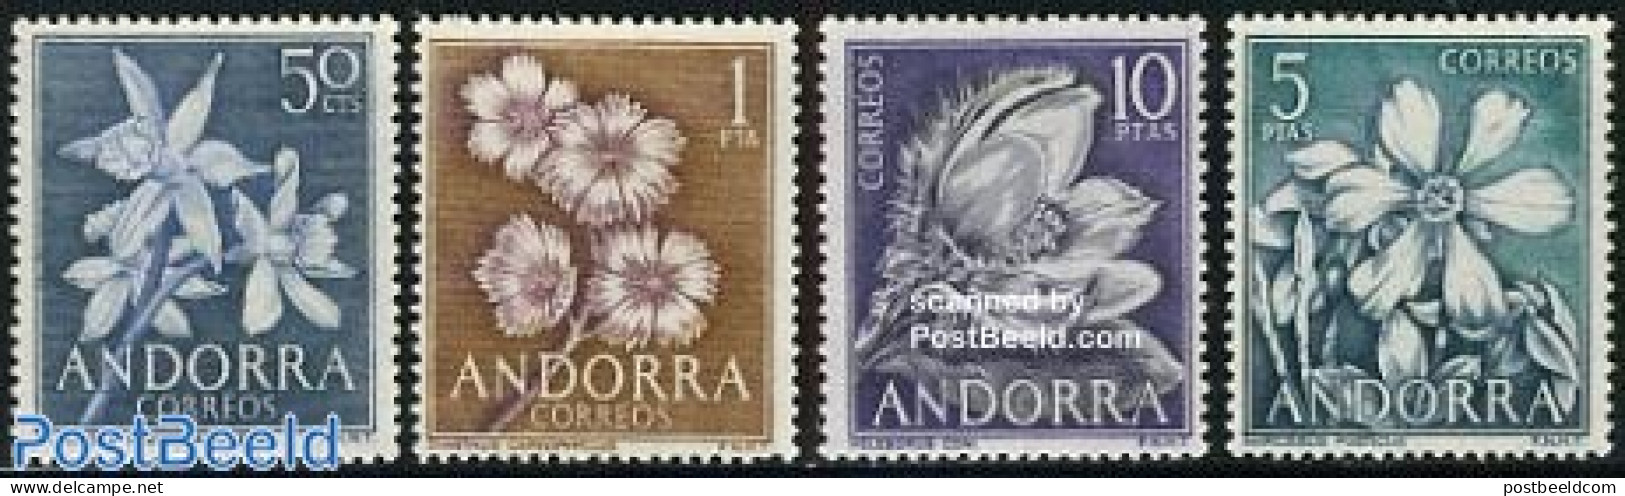 Andorra, Spanish Post 1966 Definitives, Flowers 4v, Mint NH, Nature - Flowers & Plants - Nuevos